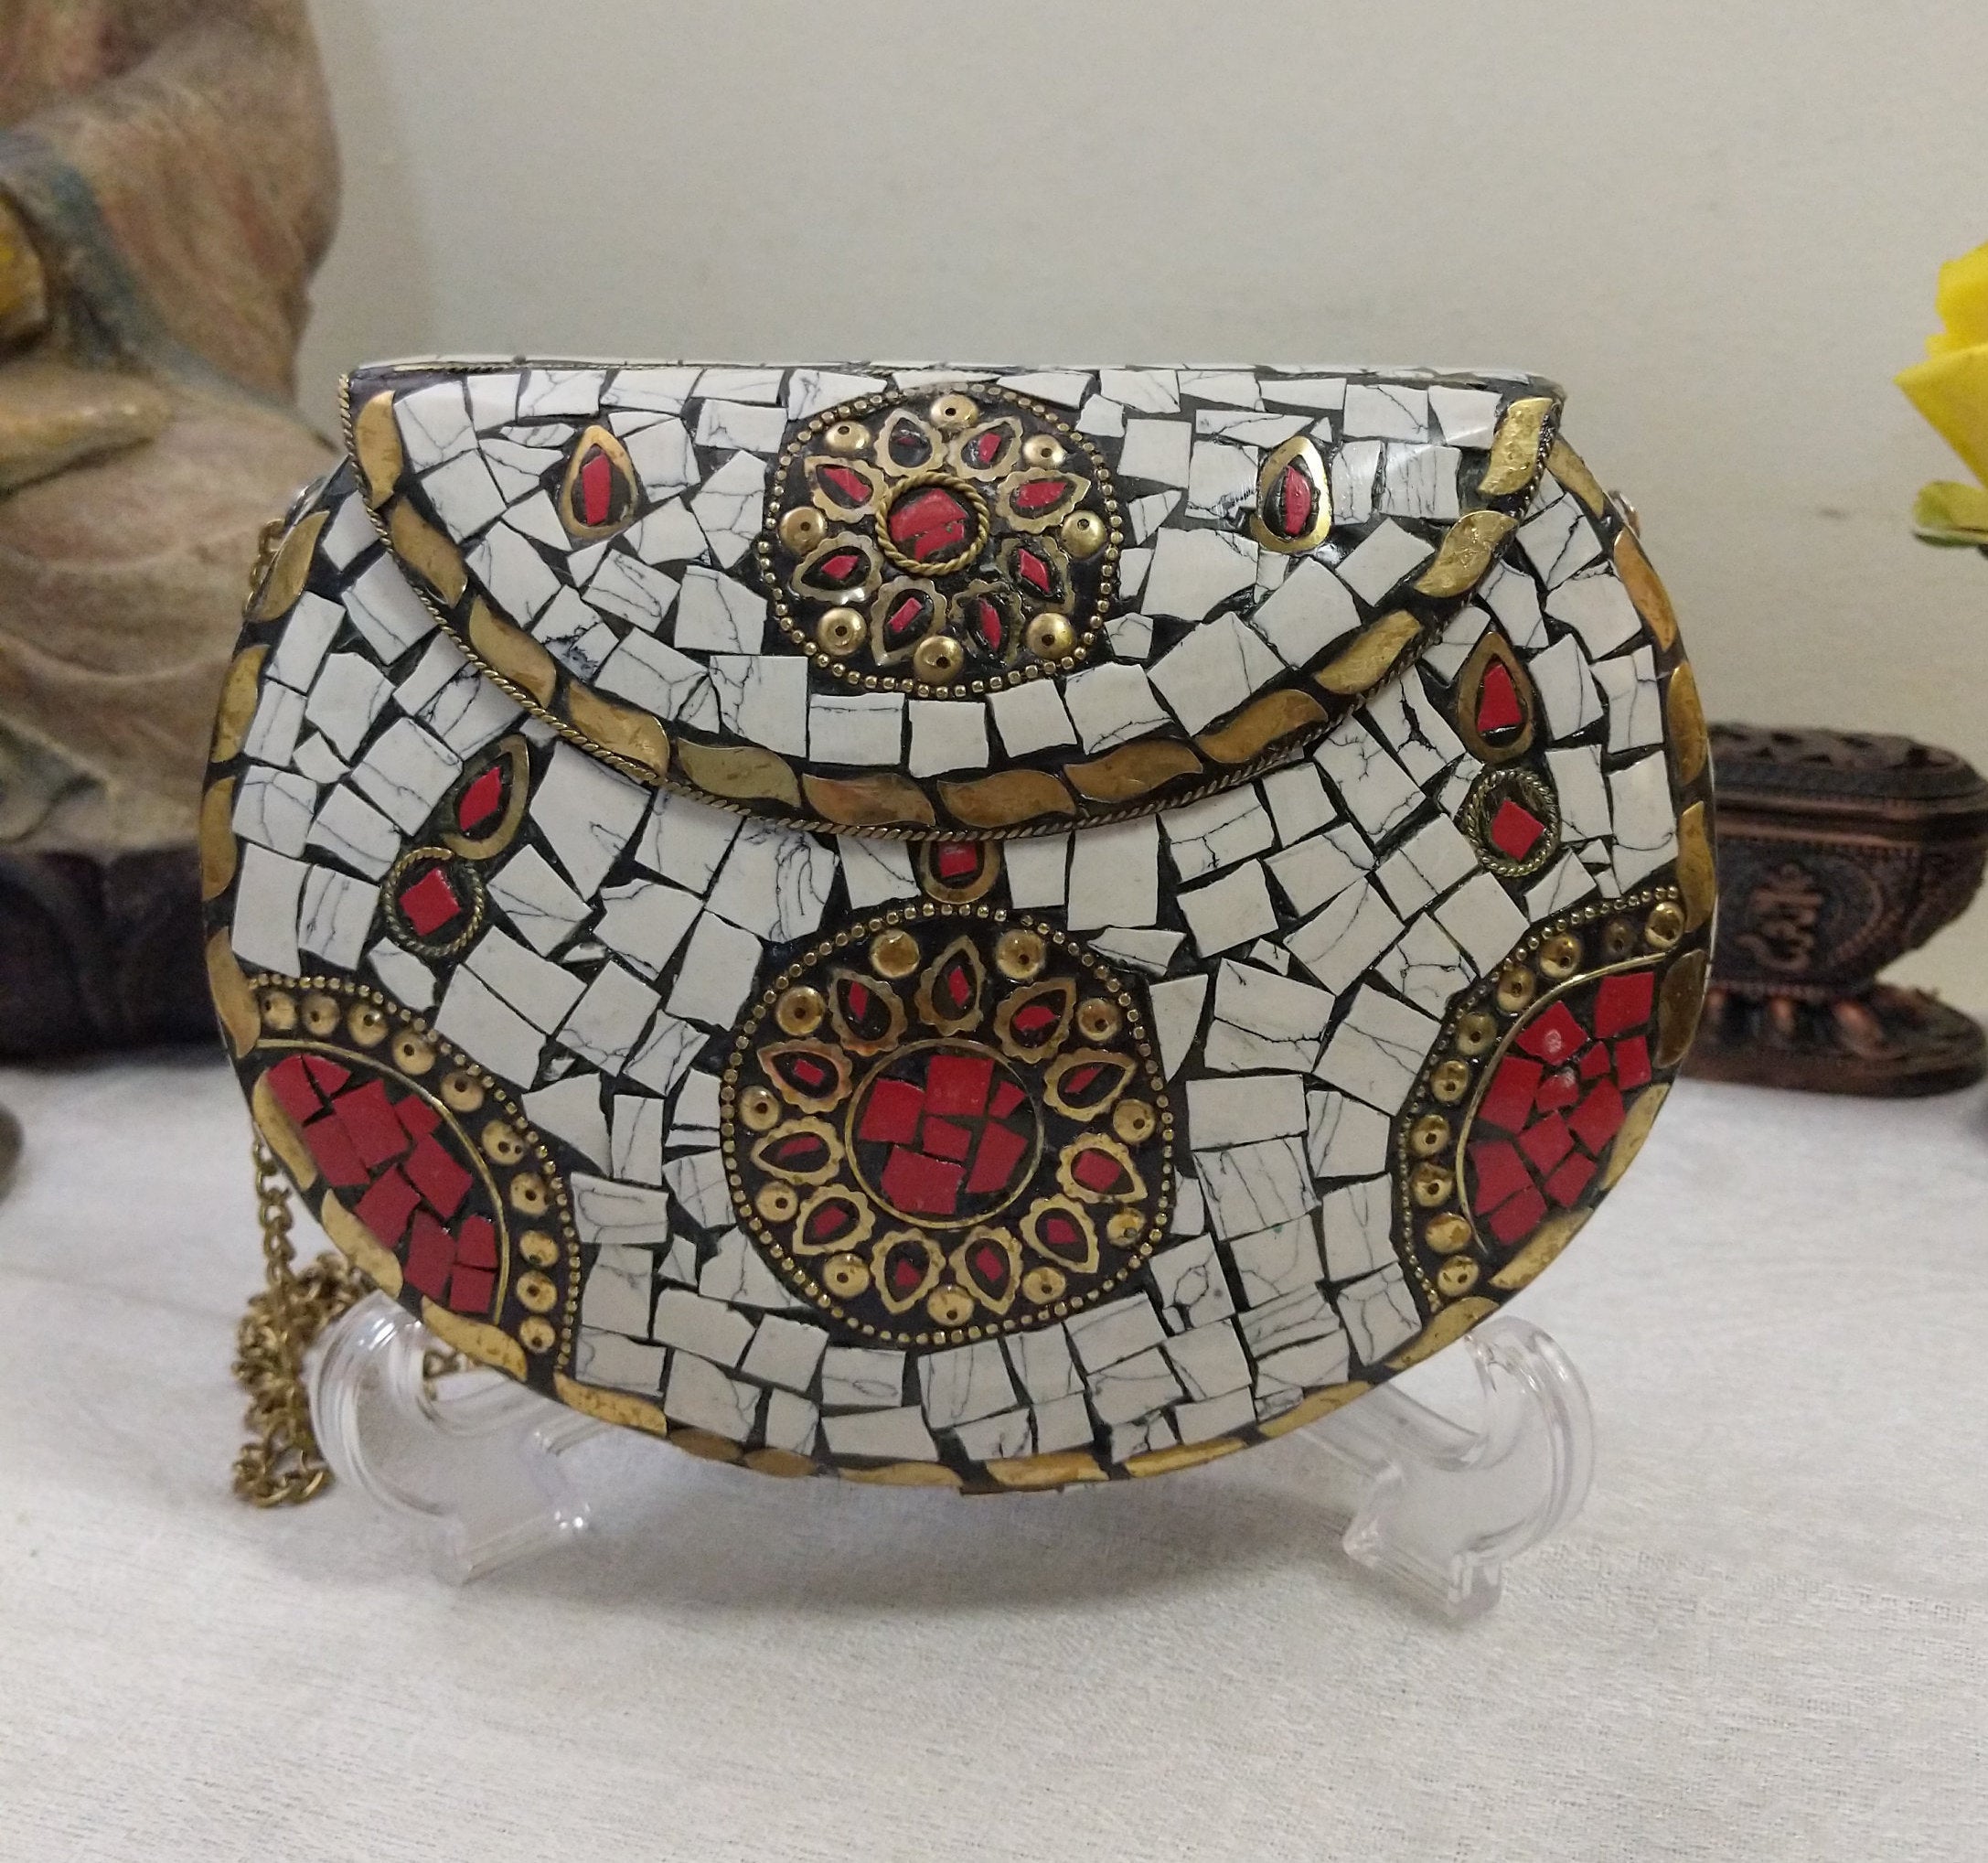 Handmade On-trend metal, stones and mosaic bag/evening bag/Clutch bag/Vintage bag.